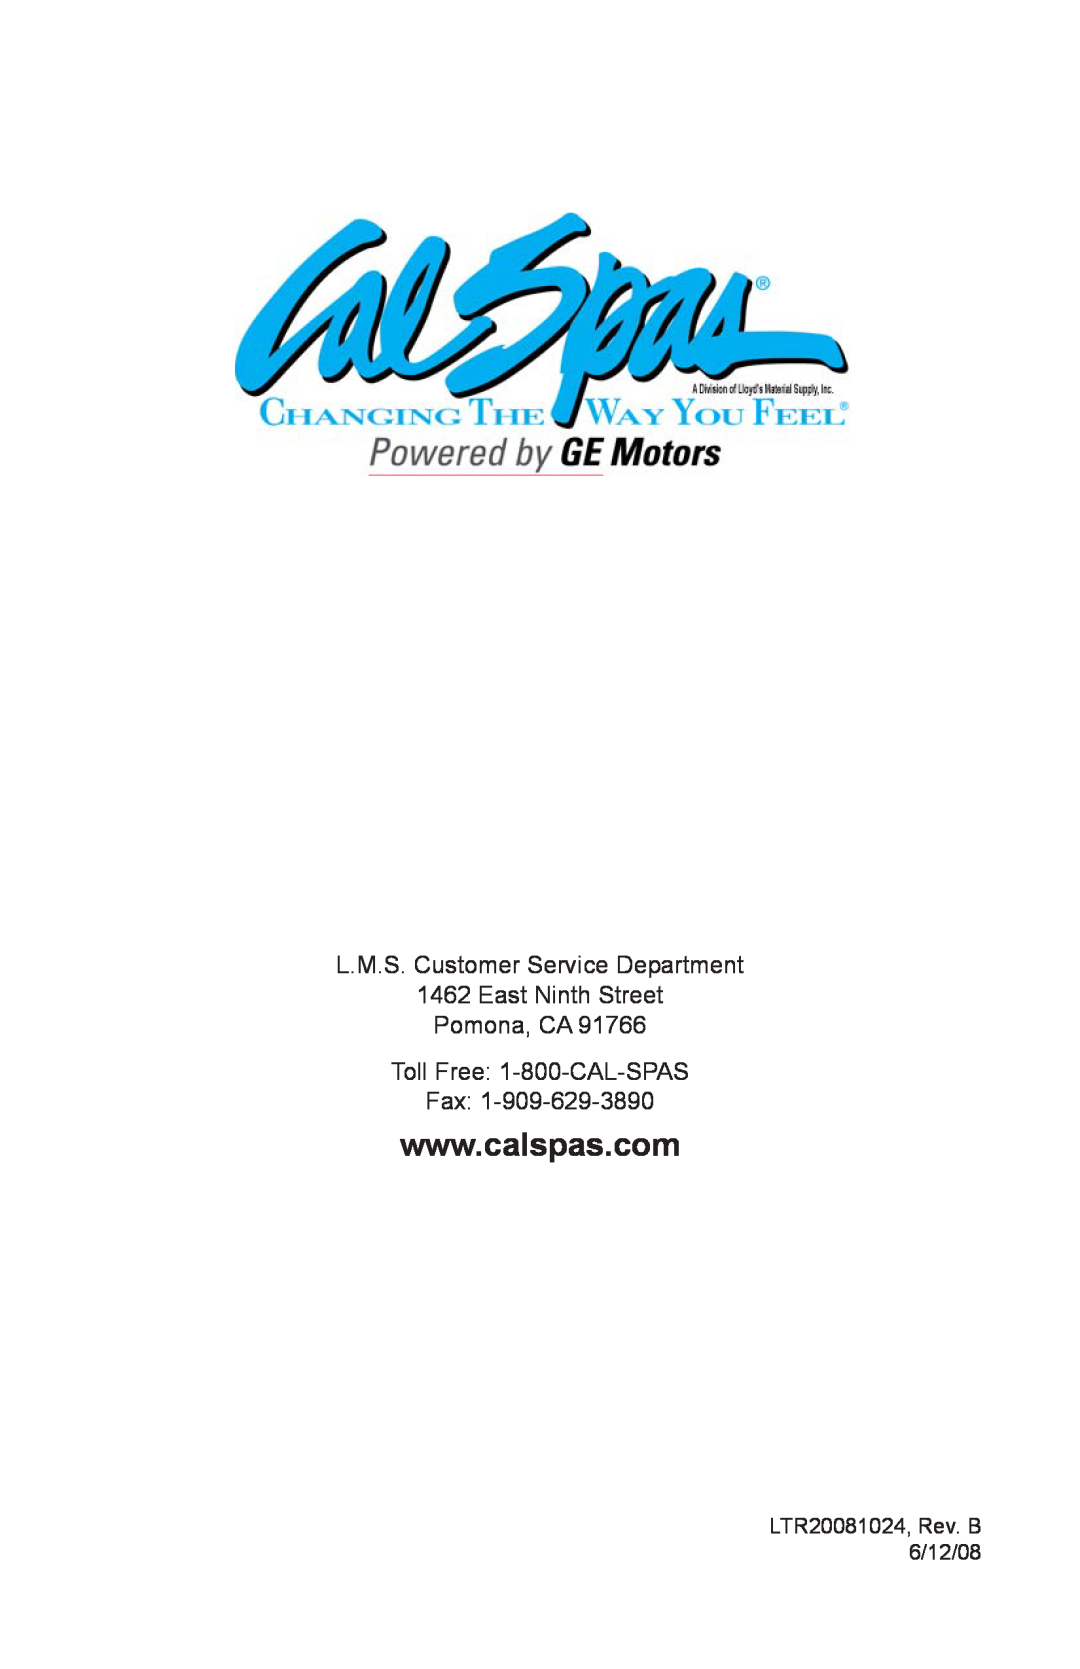 Cal Spas A744L, A857B manual L.M.S. Customer Service Department, East Ninth Street Pomona, CA, Toll Free: 1-800-CAL-SPAS Fax 